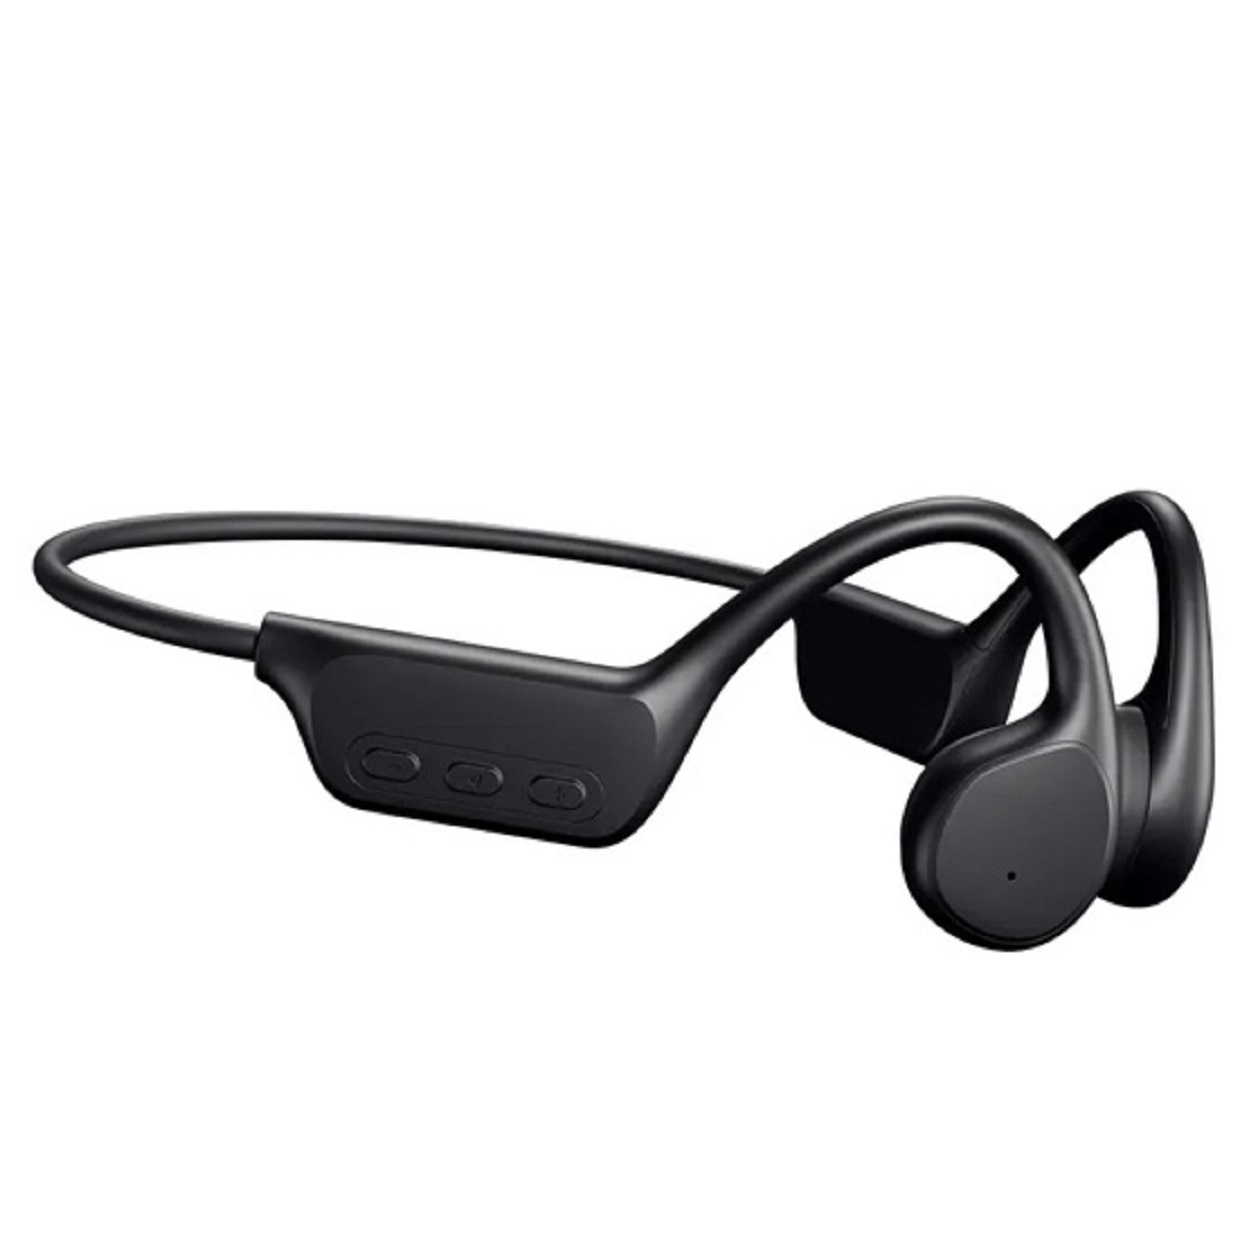 MIRUX Open Ear Knochenleitung X7 Open-ear Kopfhörer mit Schwarz 32GB IPX8 Bluetooth Musik-Player